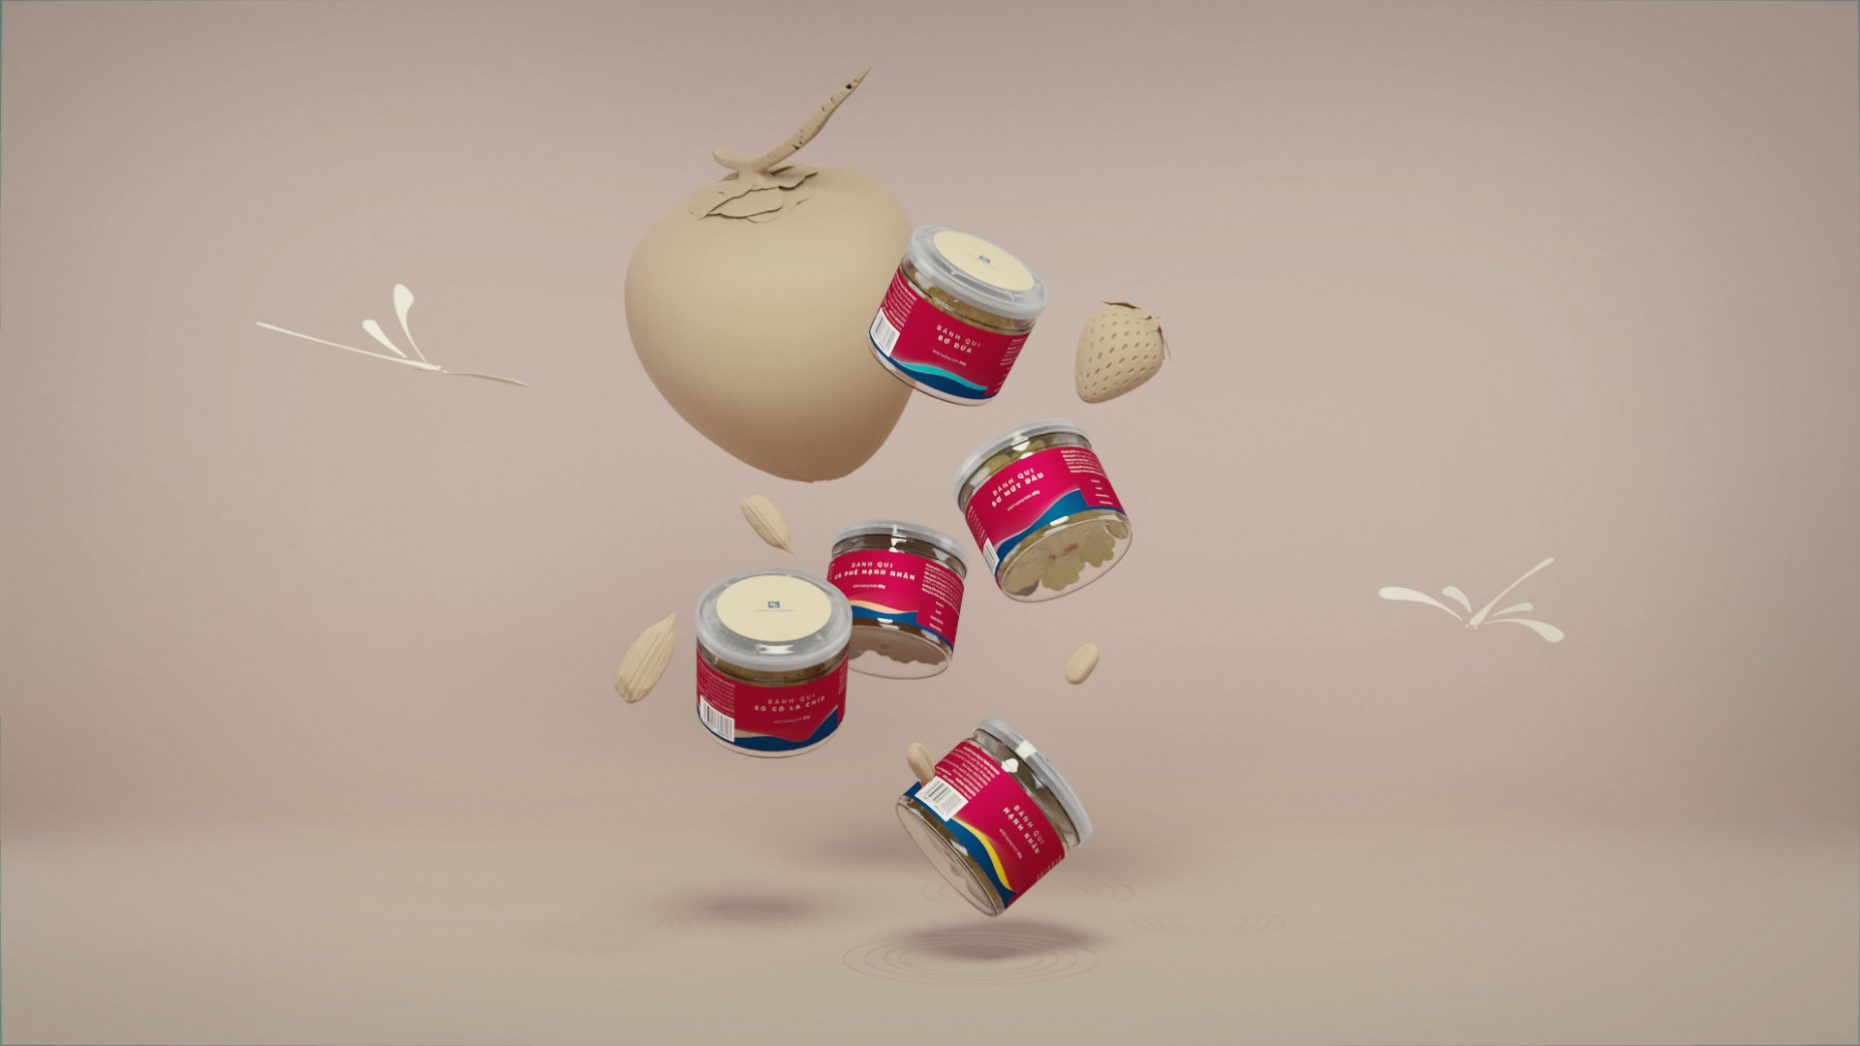 Scene 04 Tet Comp - Fresh Garden - Cookie "Tet" 3D product visualization - Sonny Nguyen